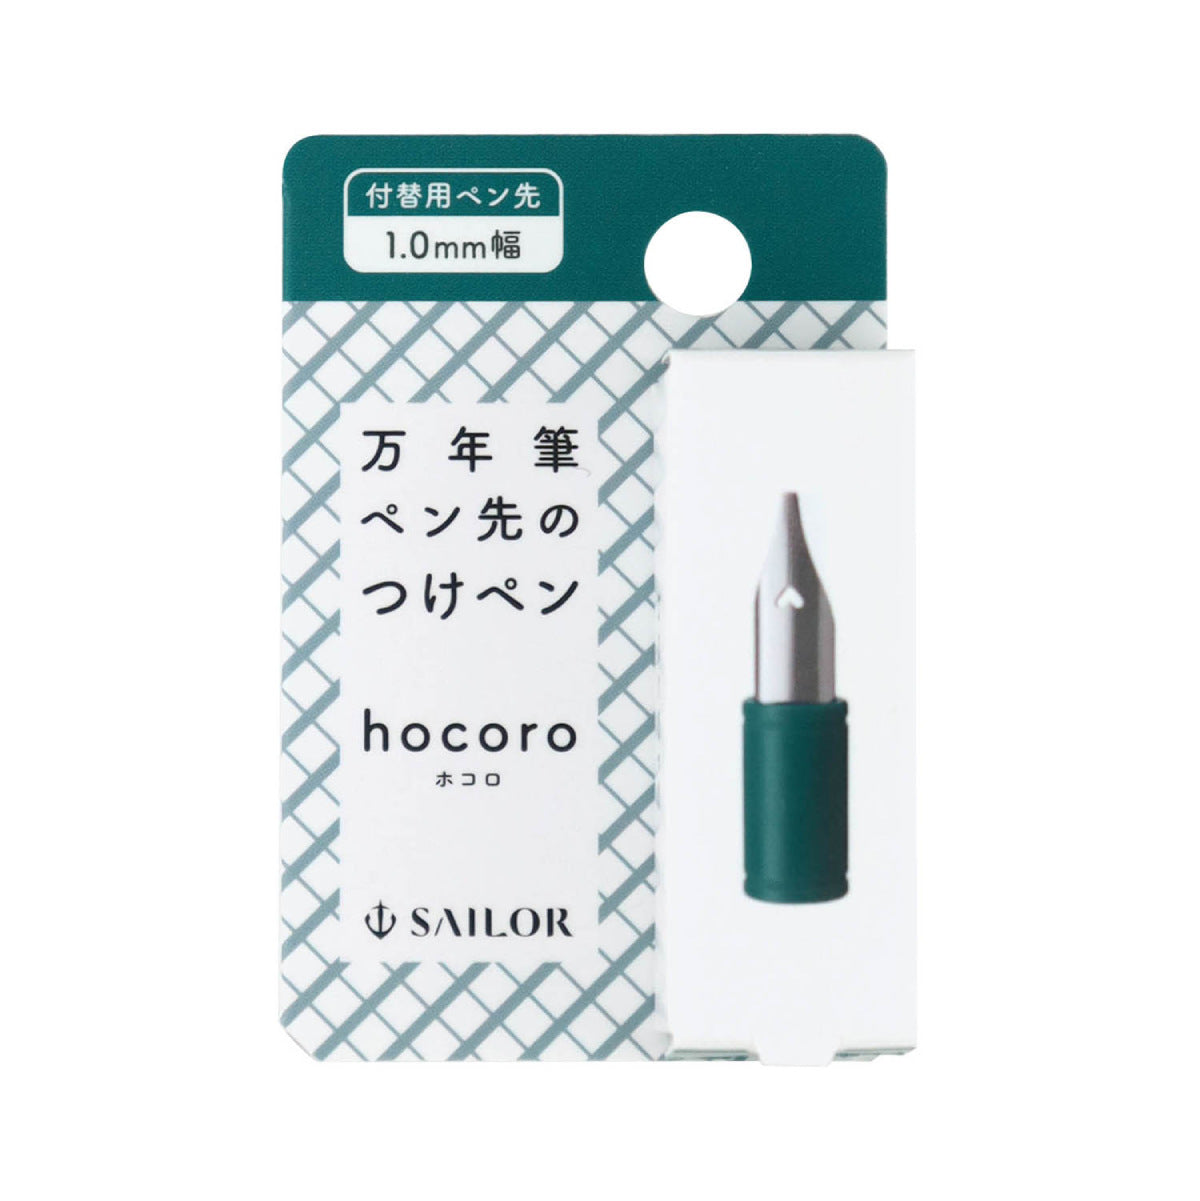 Sailor Hocoro - replacement spring 1.0 mm